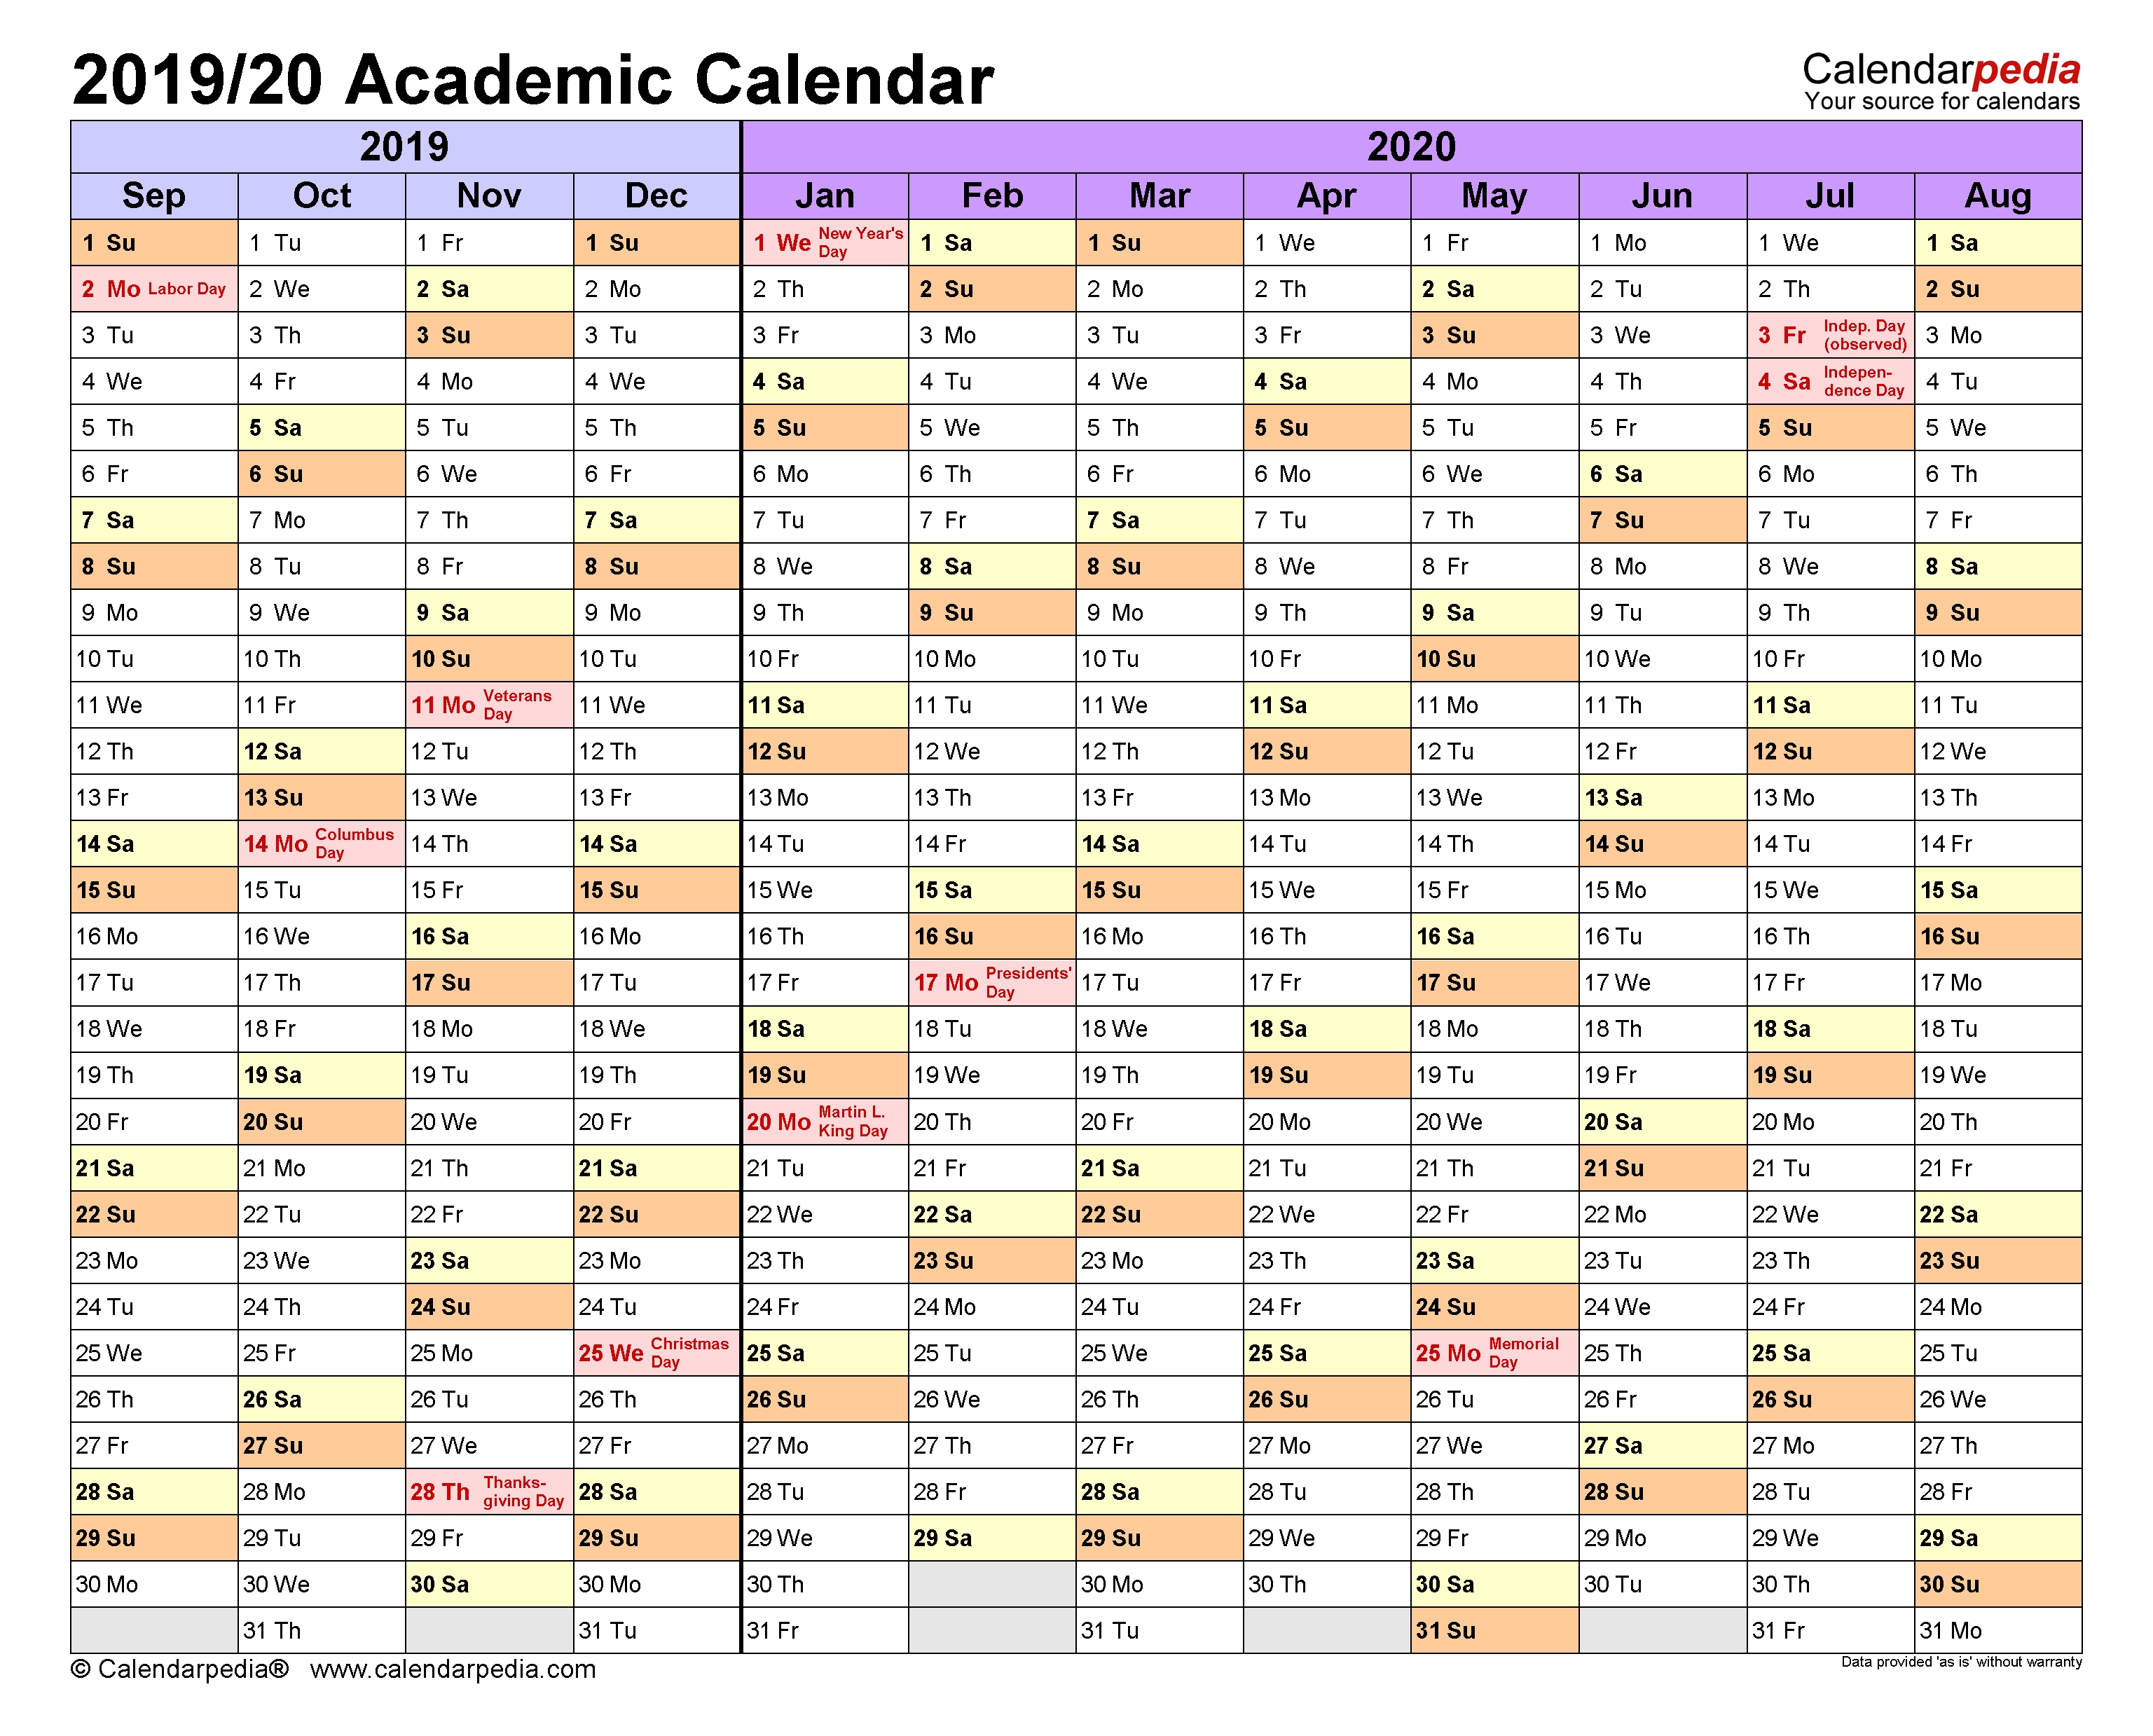 Academic Calendars 2019/2020 - Free Printable Word Templates intended for Free Printable Academic Calendar 2019-2020